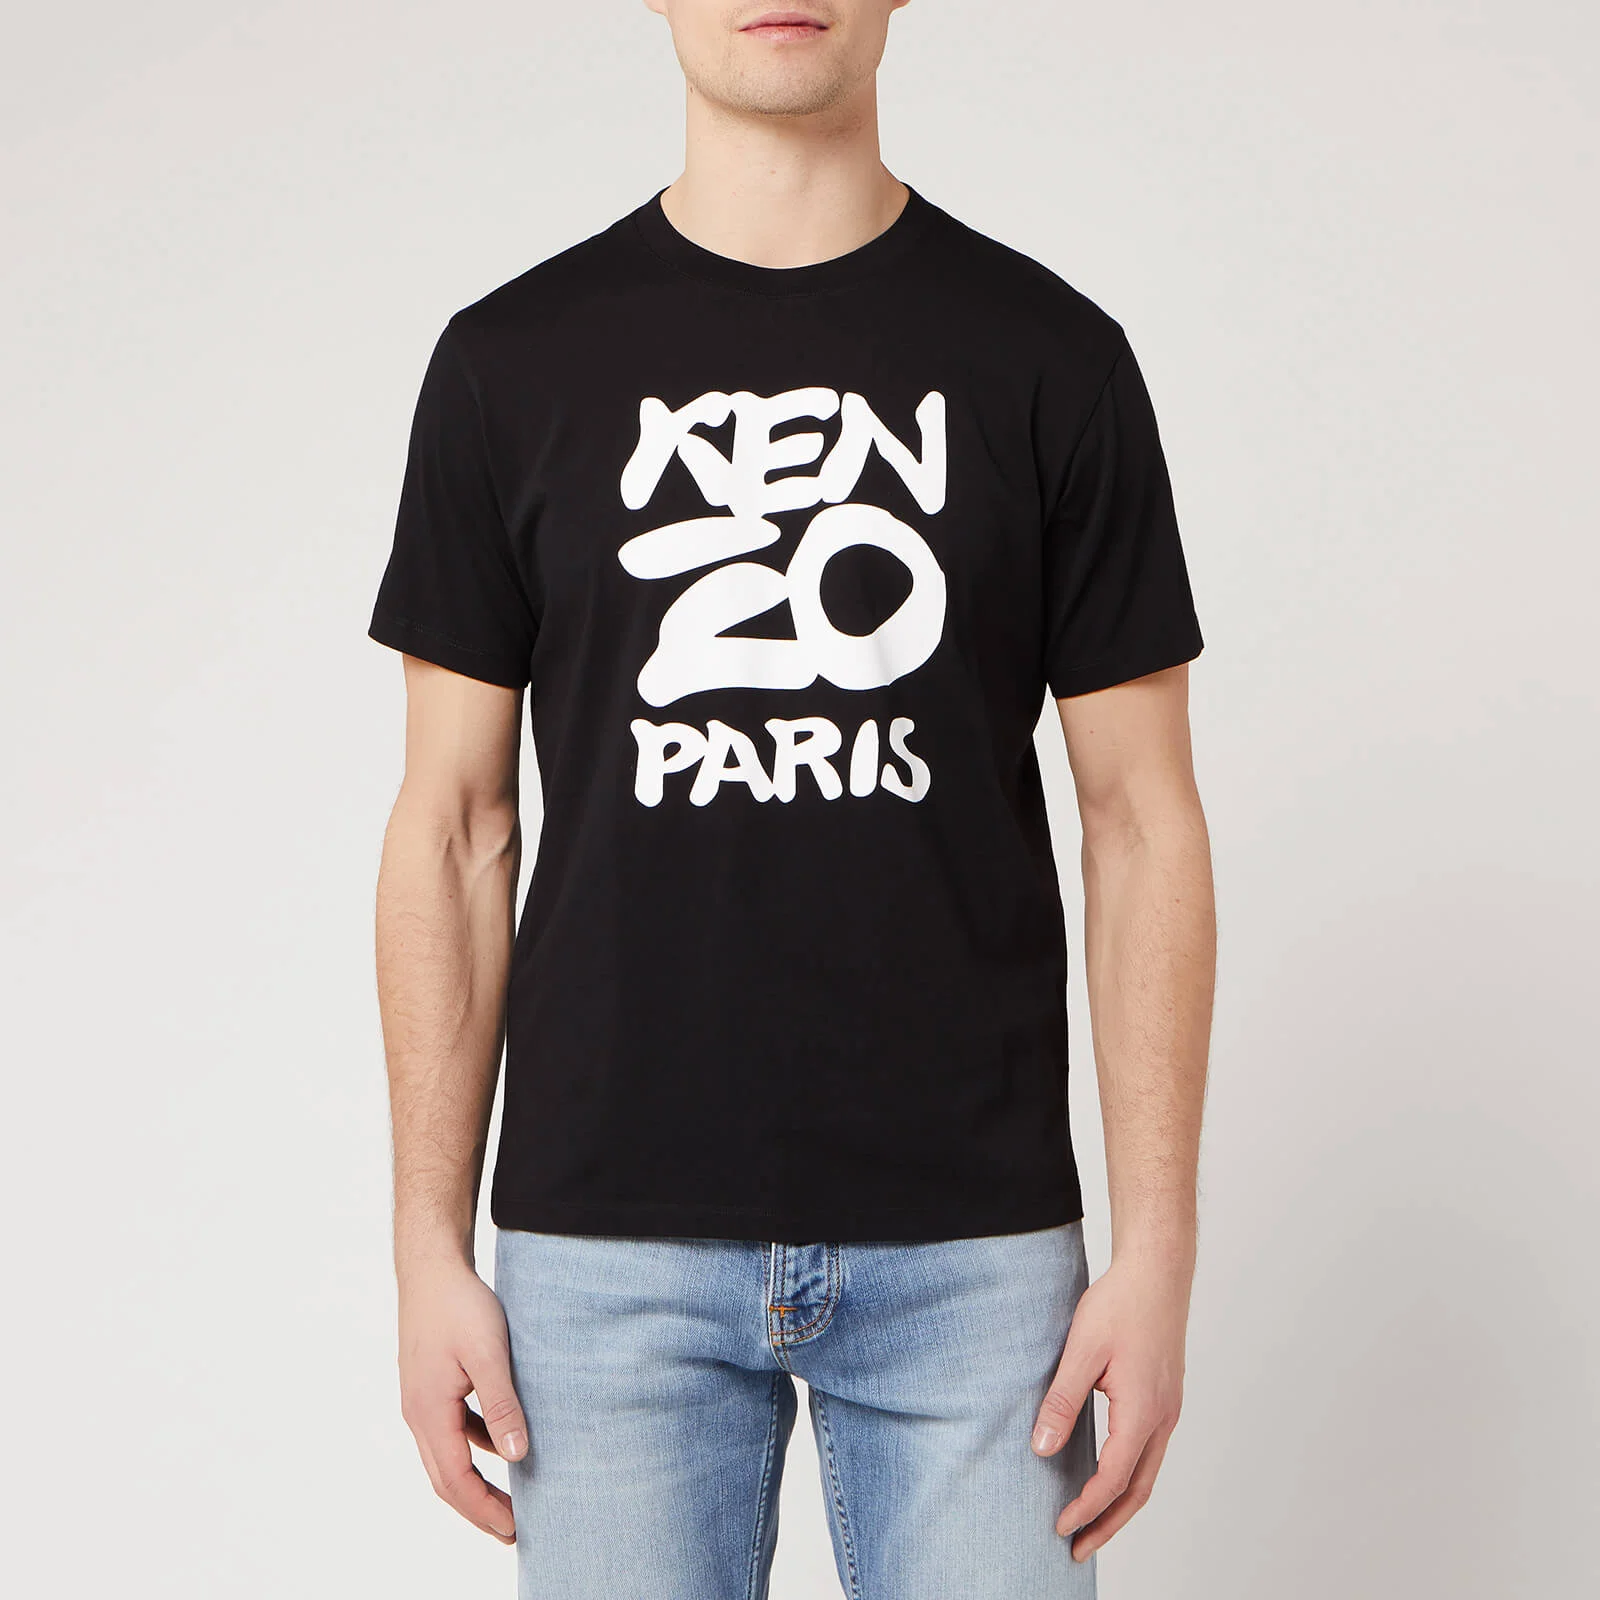 KENZO Men's Mermaid T-Shirt - Black Image 1